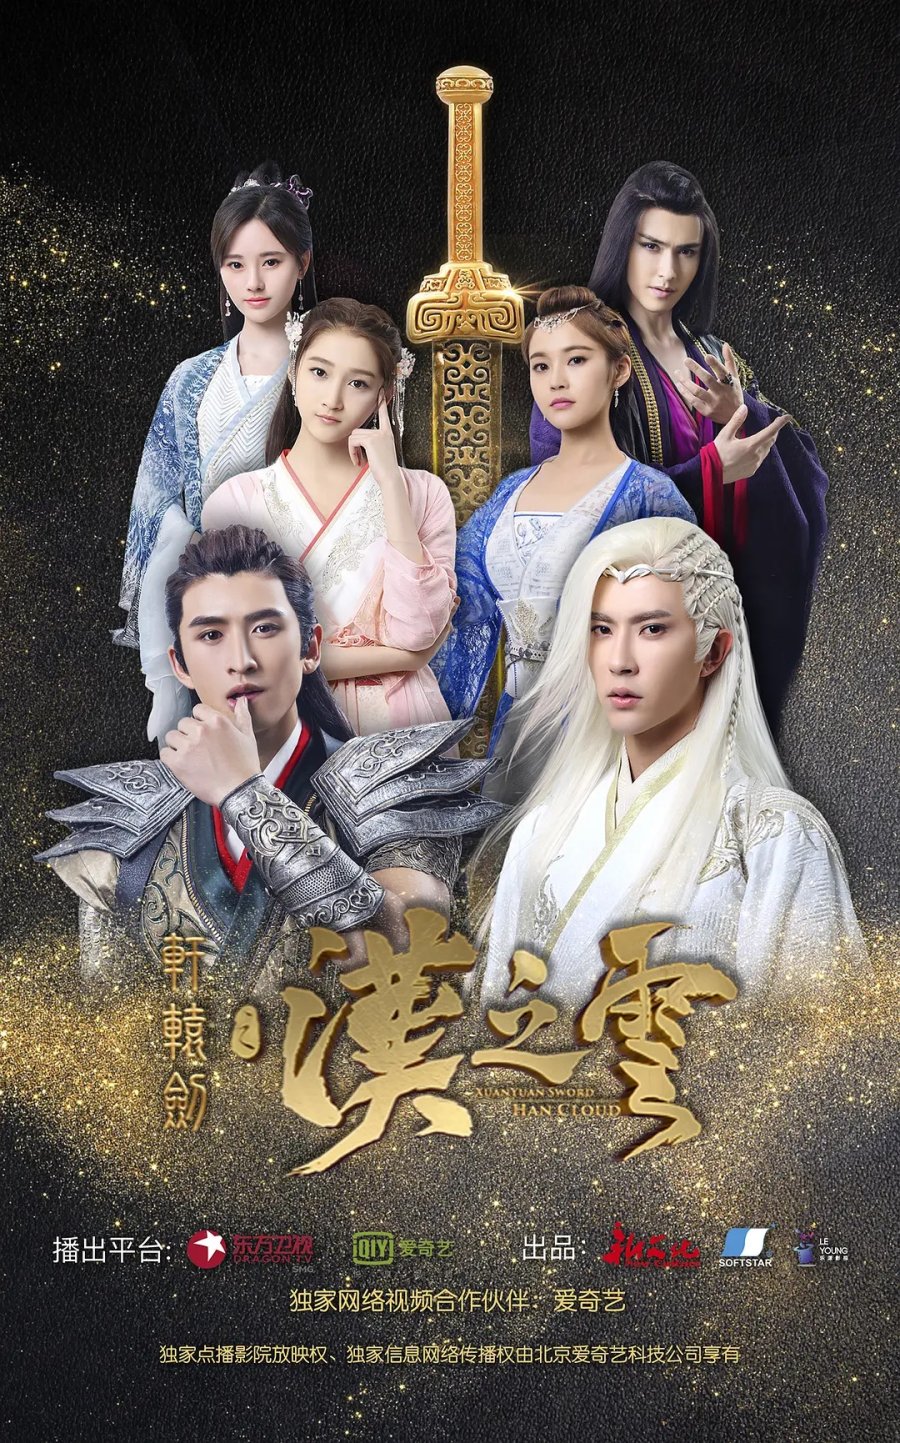 Xuan-Yuan Sword VII Poster Wallpapers